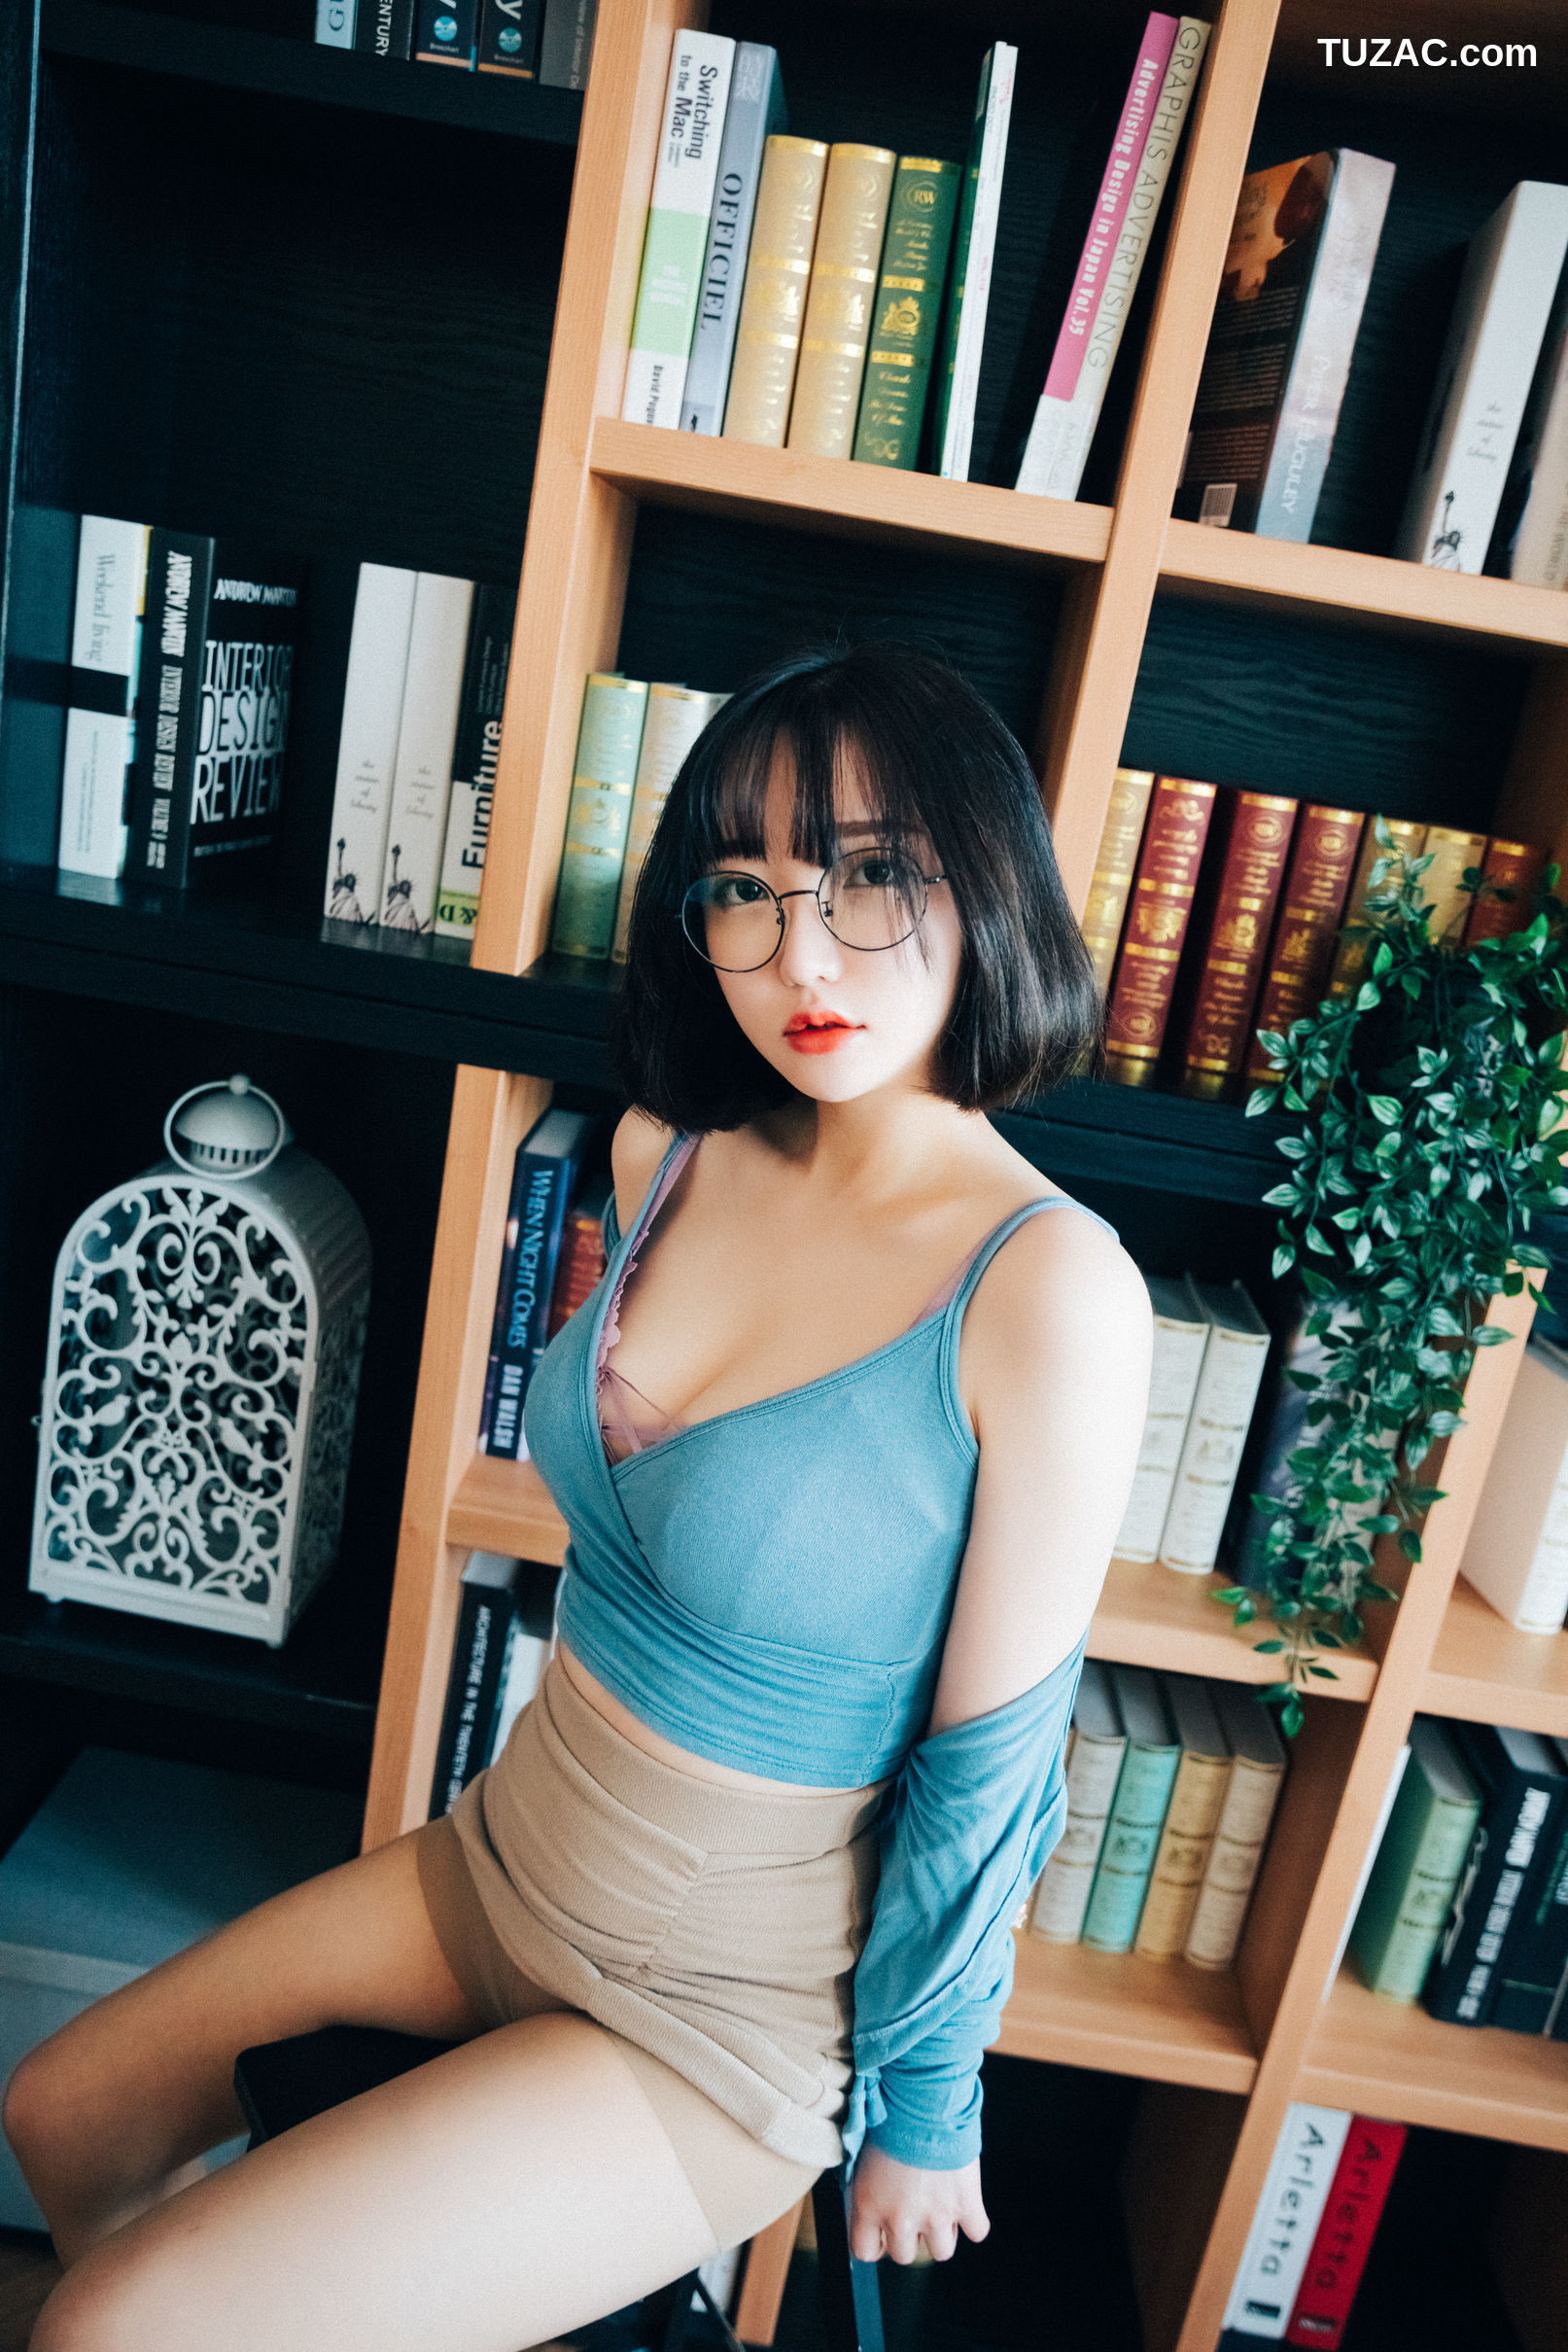 孙乐乐-Son-Ye-Eun-图书馆女孩-Librarian-Girl-[Loozy]